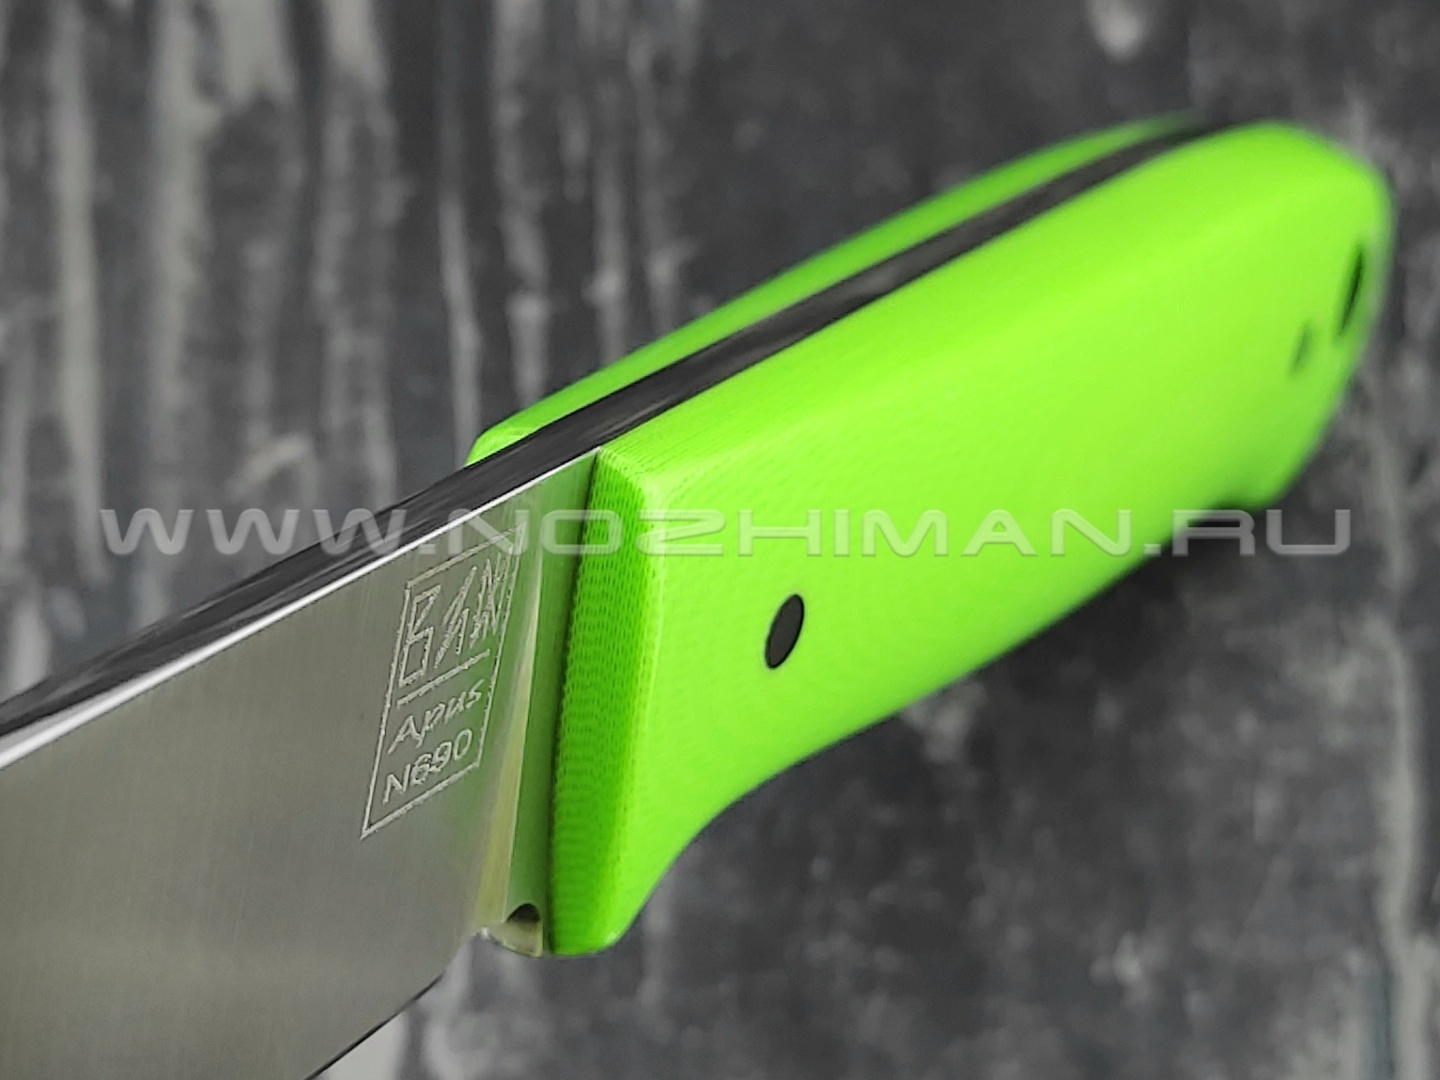 Zh Knives нож Baby R сталь N690, рукоять G10 light green